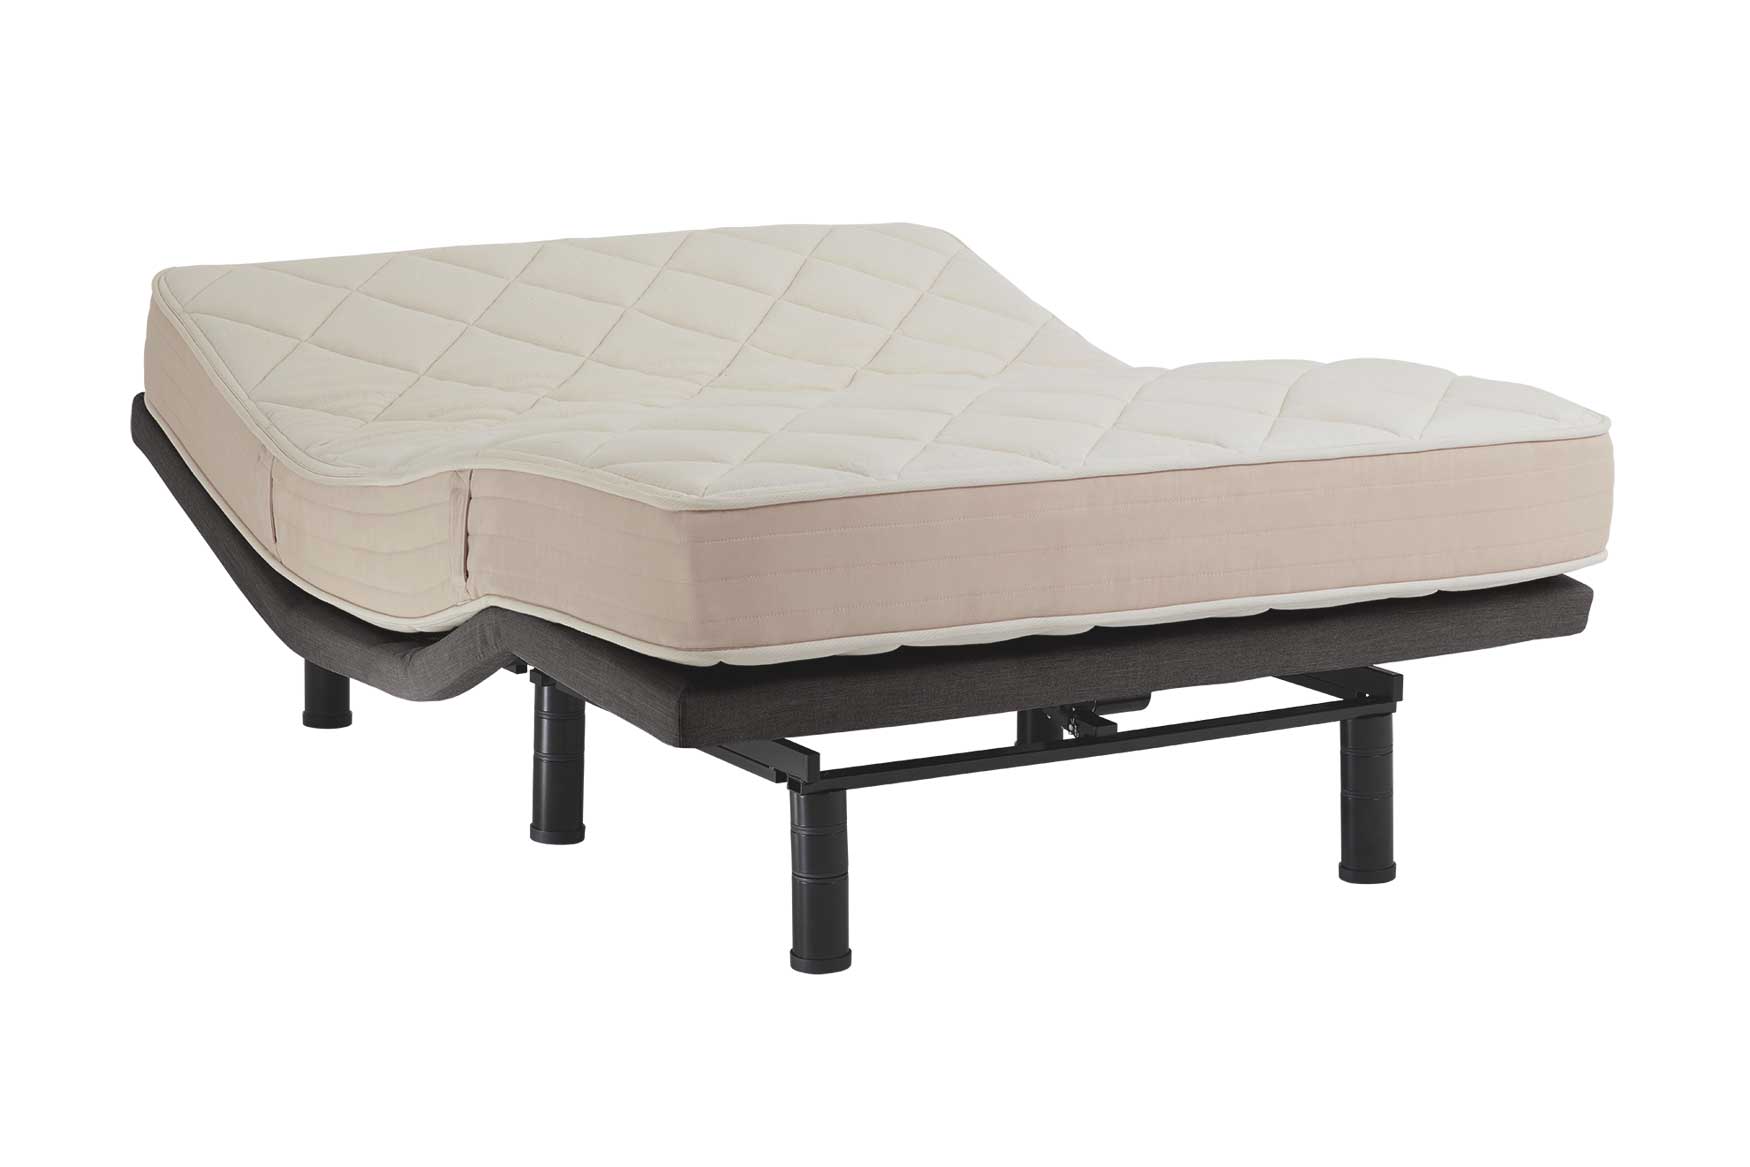 Custom Comfort A-300 – Premium Wireless Adjustable Bed with Massage